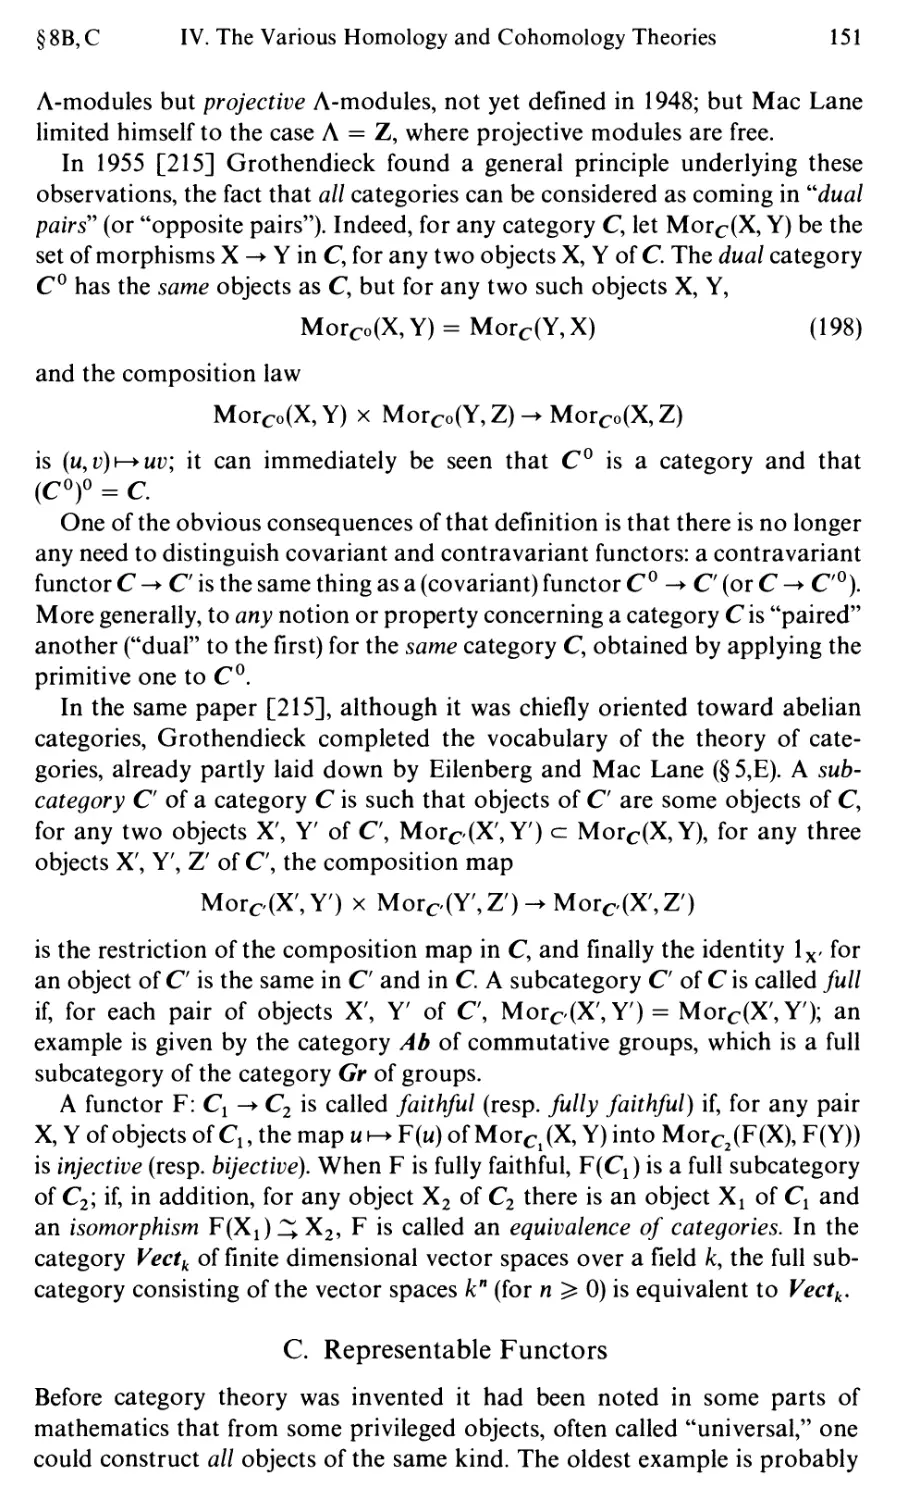 C. Representable Functors